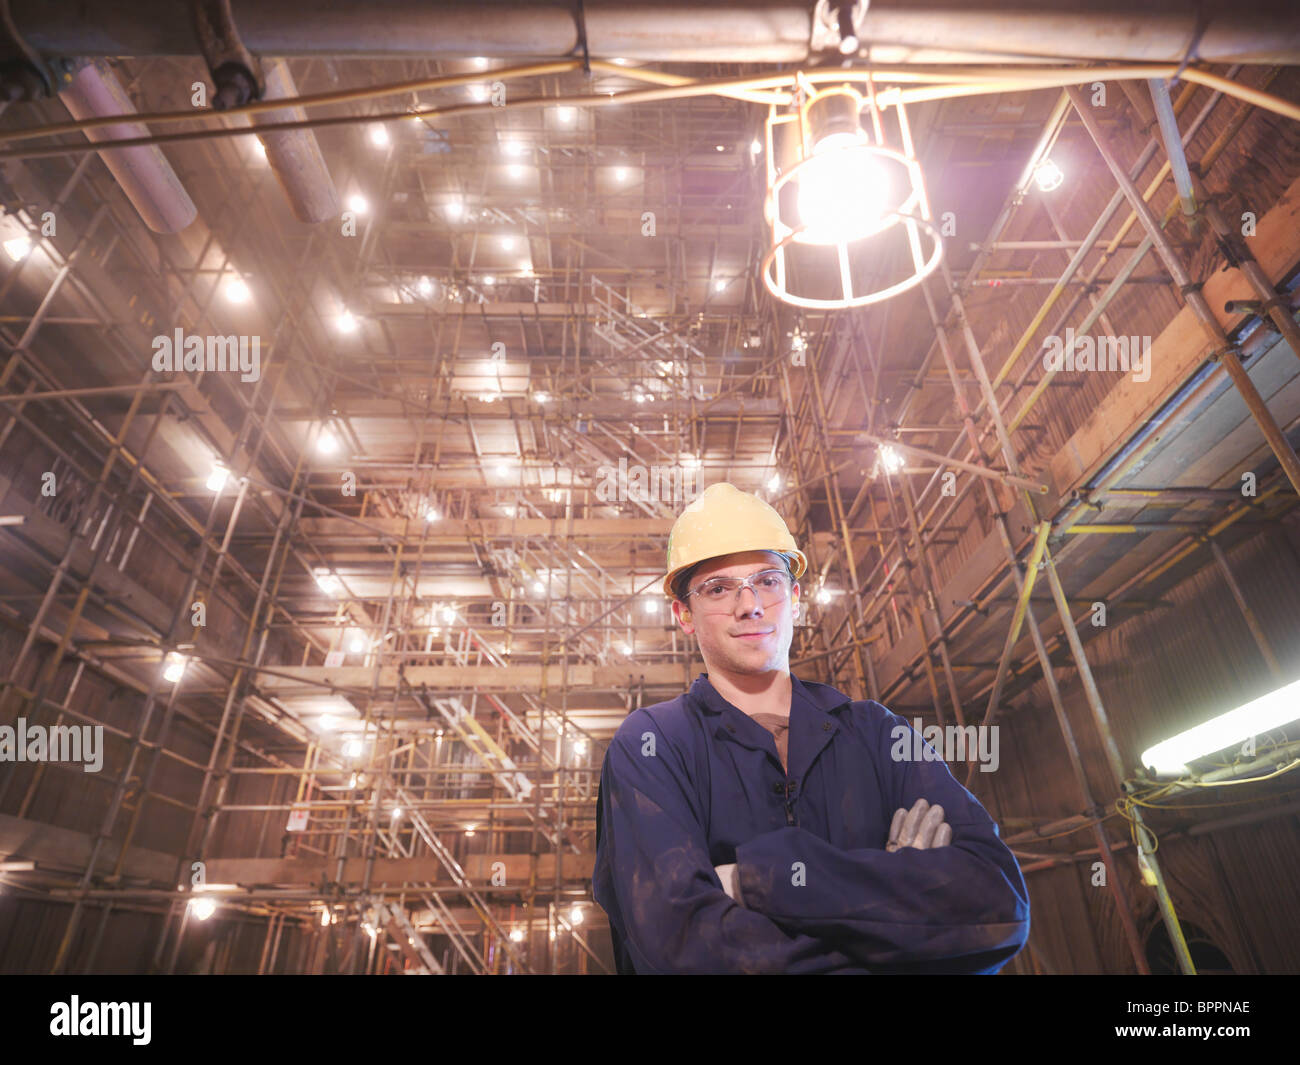 Worker posing inside of a furnace Stock Photo